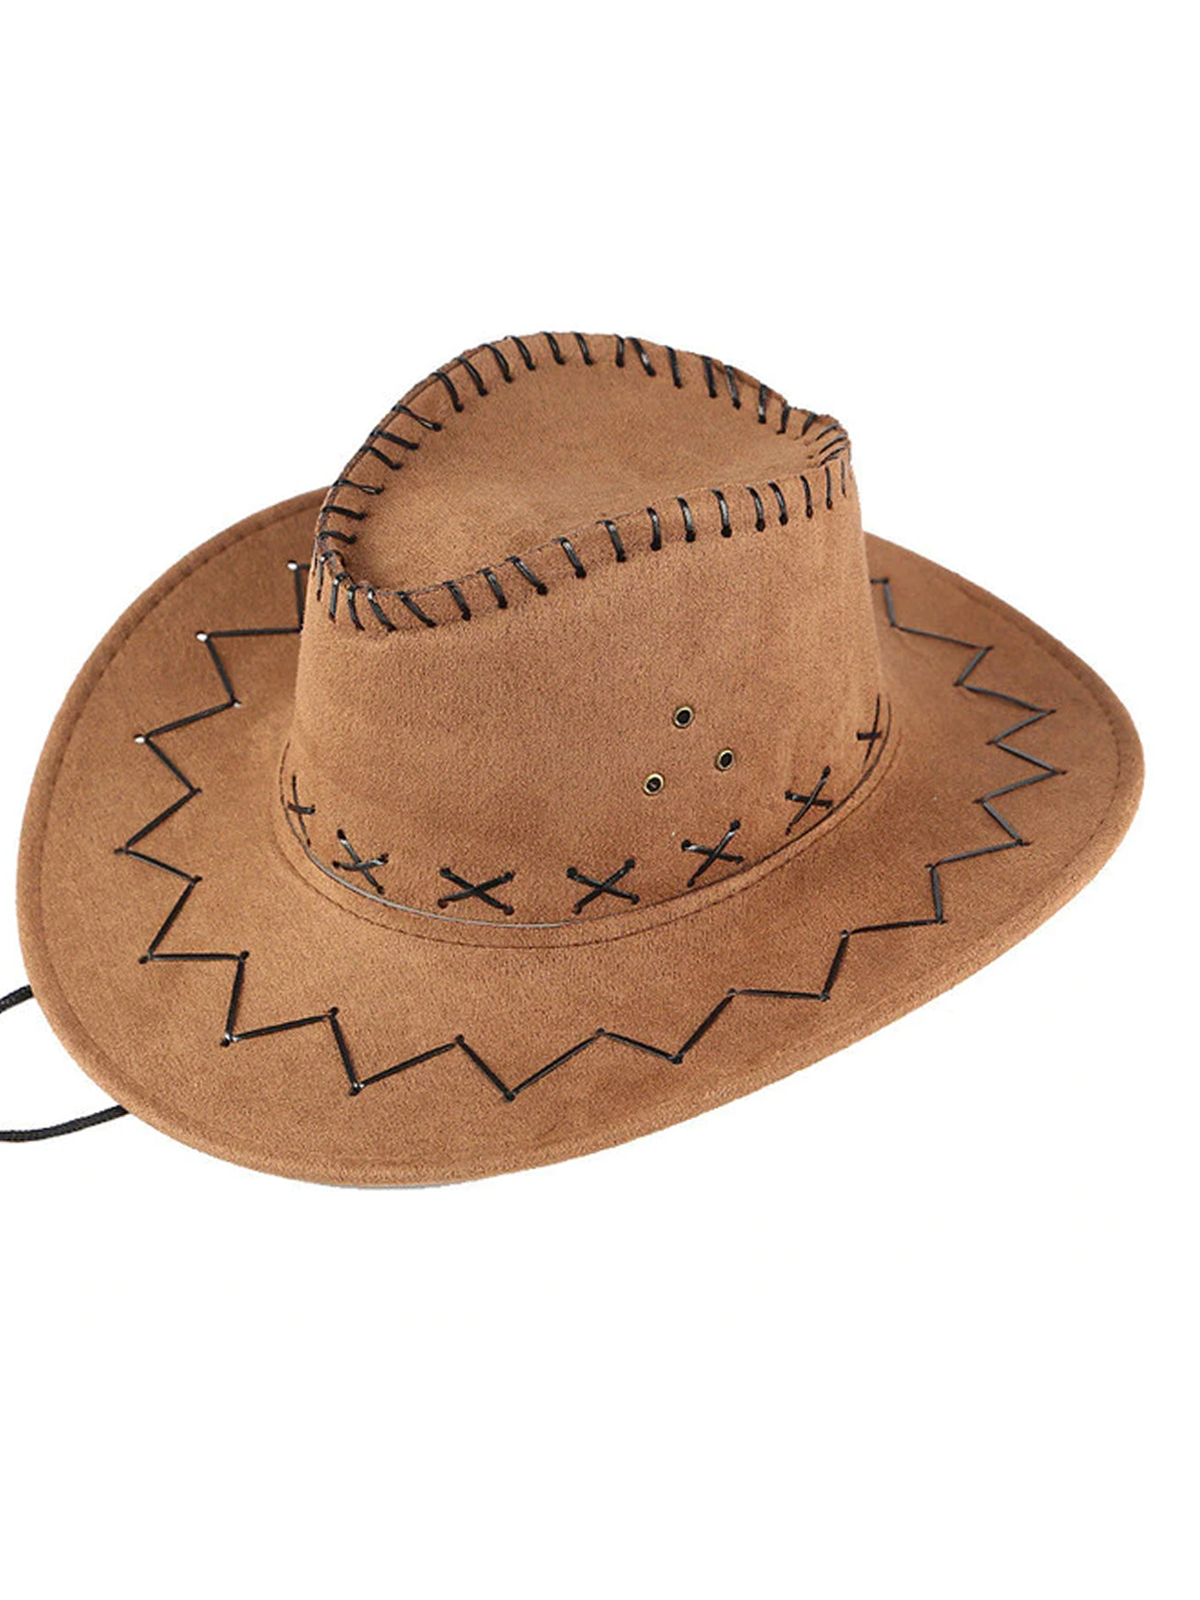 Girls Western Wide Brim Cowboy Hat